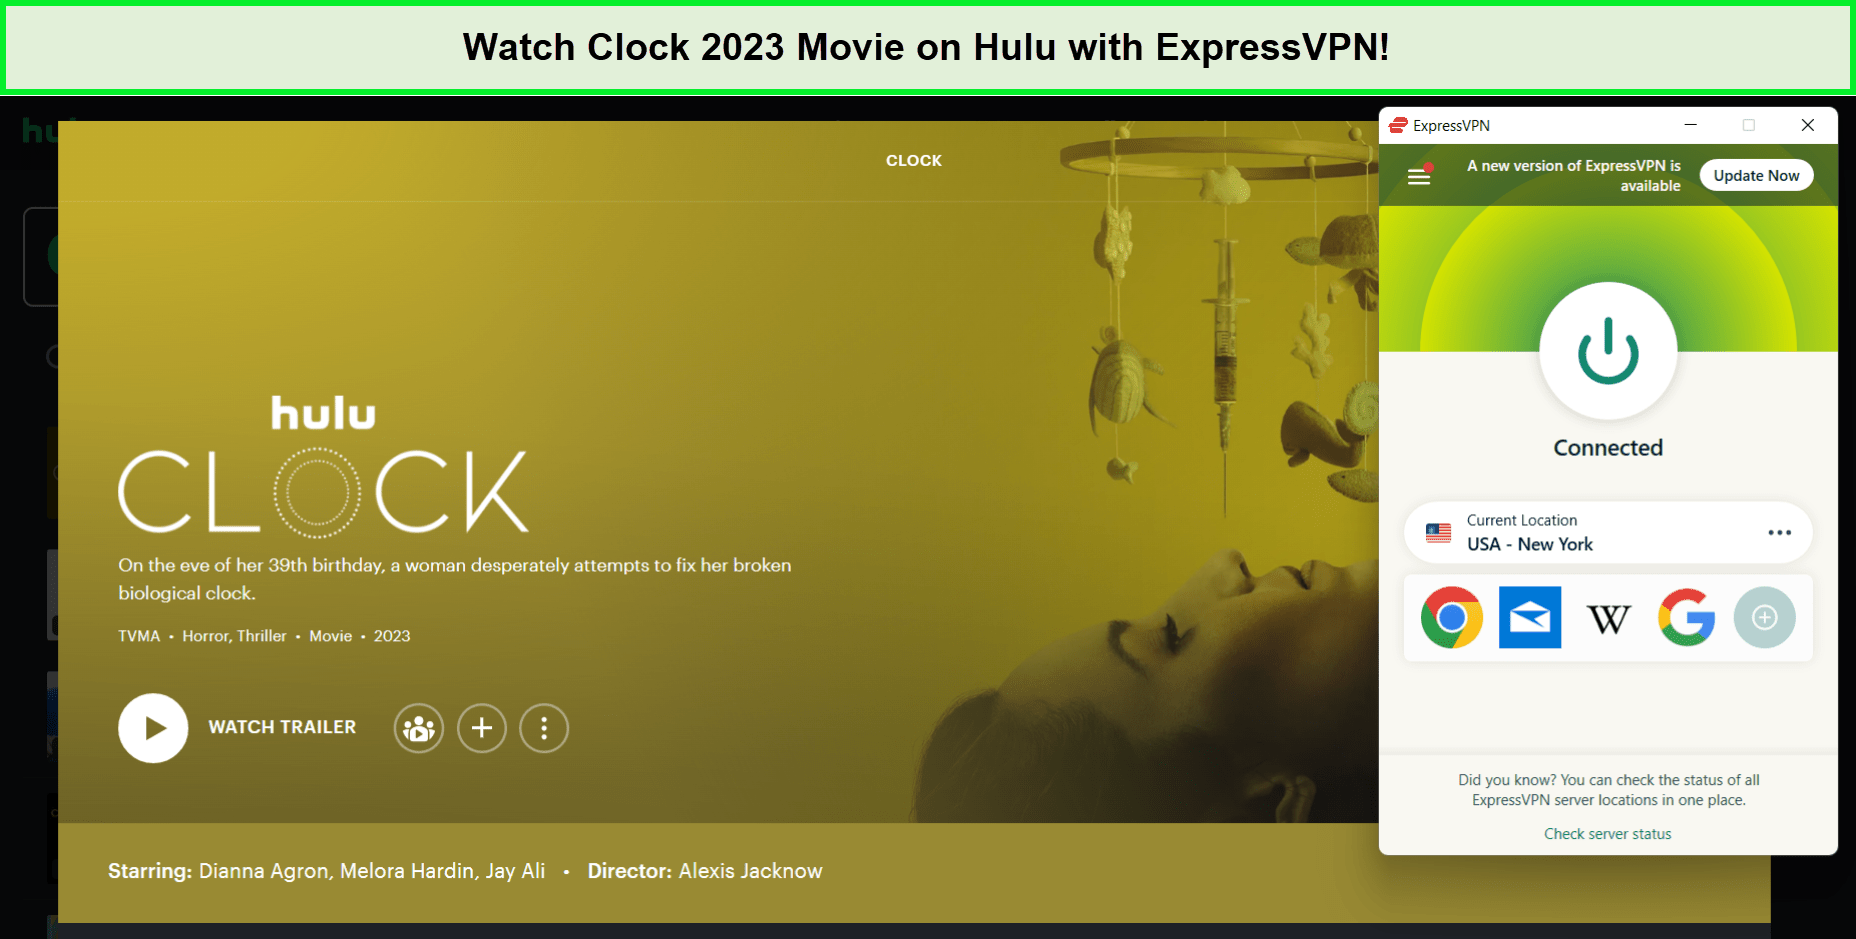 With-ExpressVPN-Watch-Clock-2023-Movie-on-Hulu-in-Netherlands